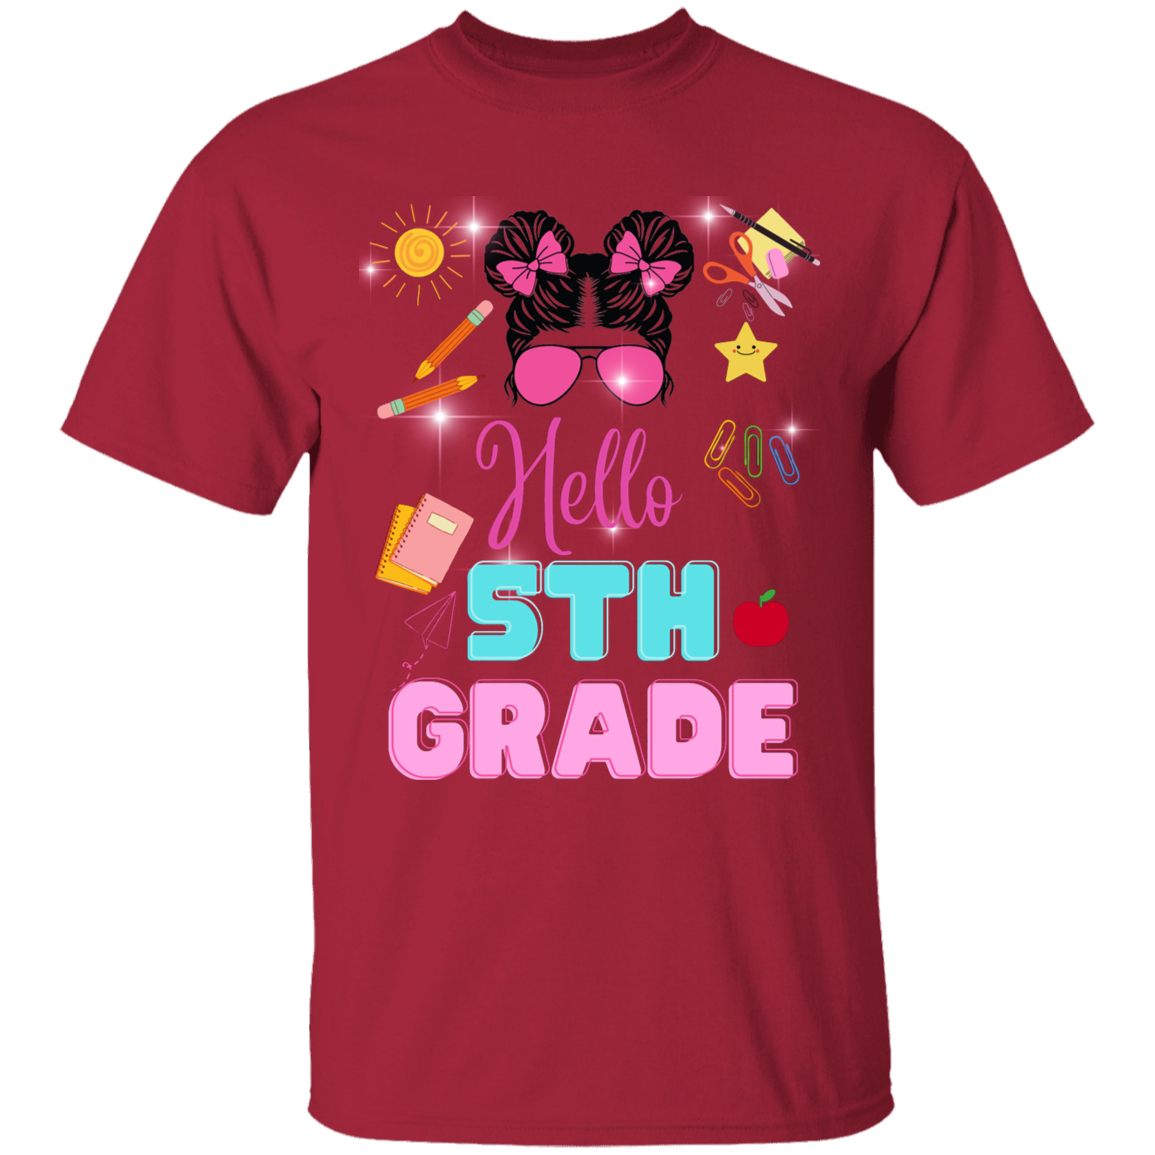 Kids back-to-school t-shirts.  Back-to-school clothing .Trendy back-to-school tees ,Cute back-to-school shirts.